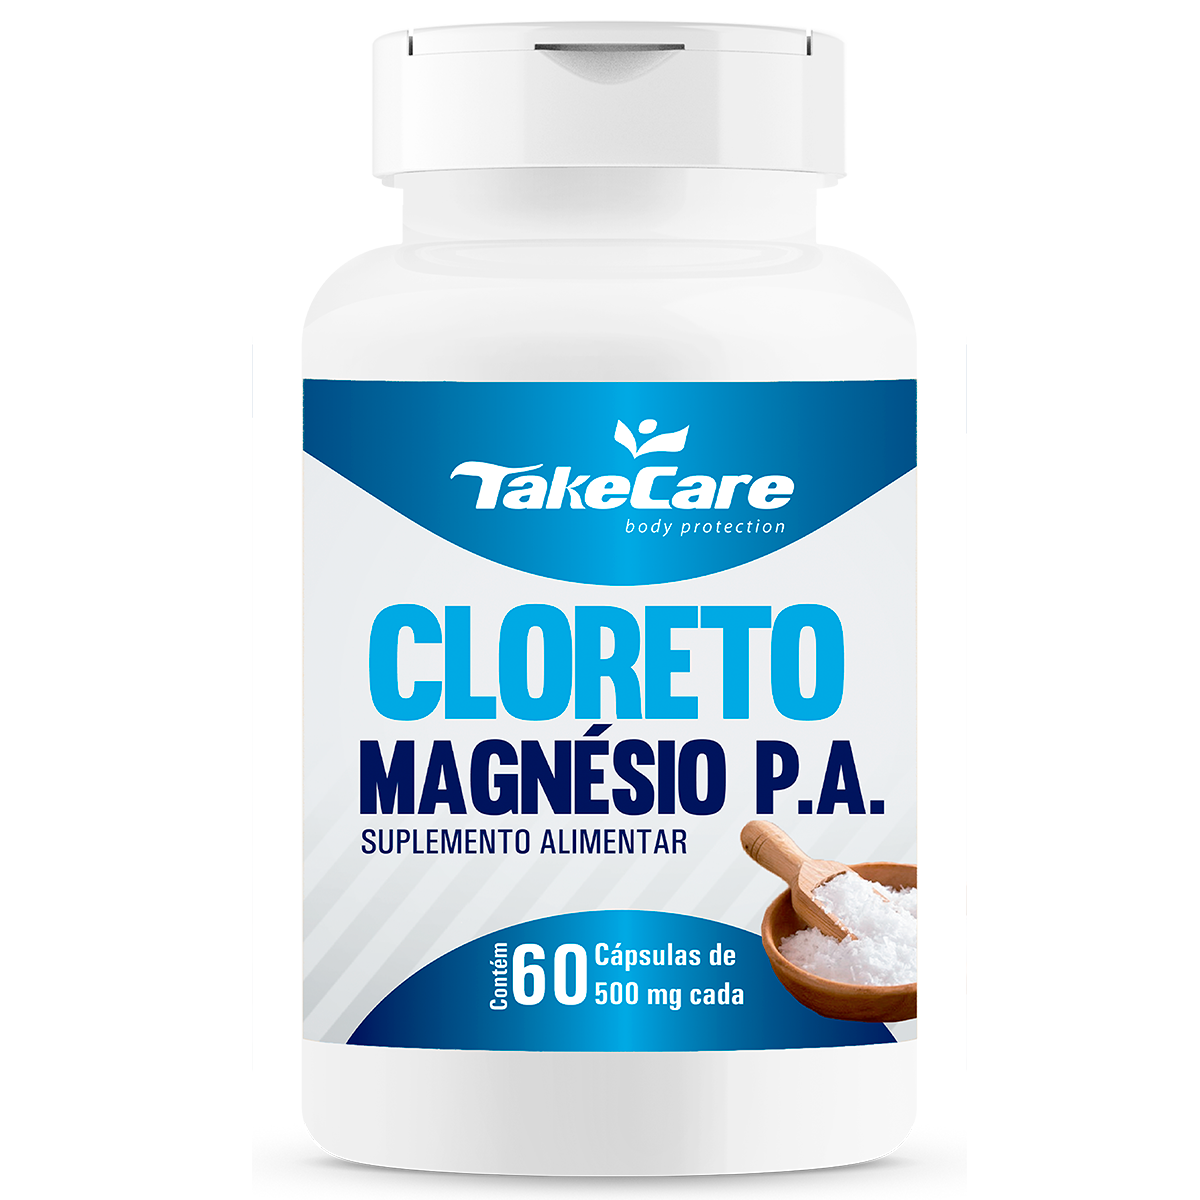 MAGNESIUM CHLORIDE – 60 CAPSULES 500 mg